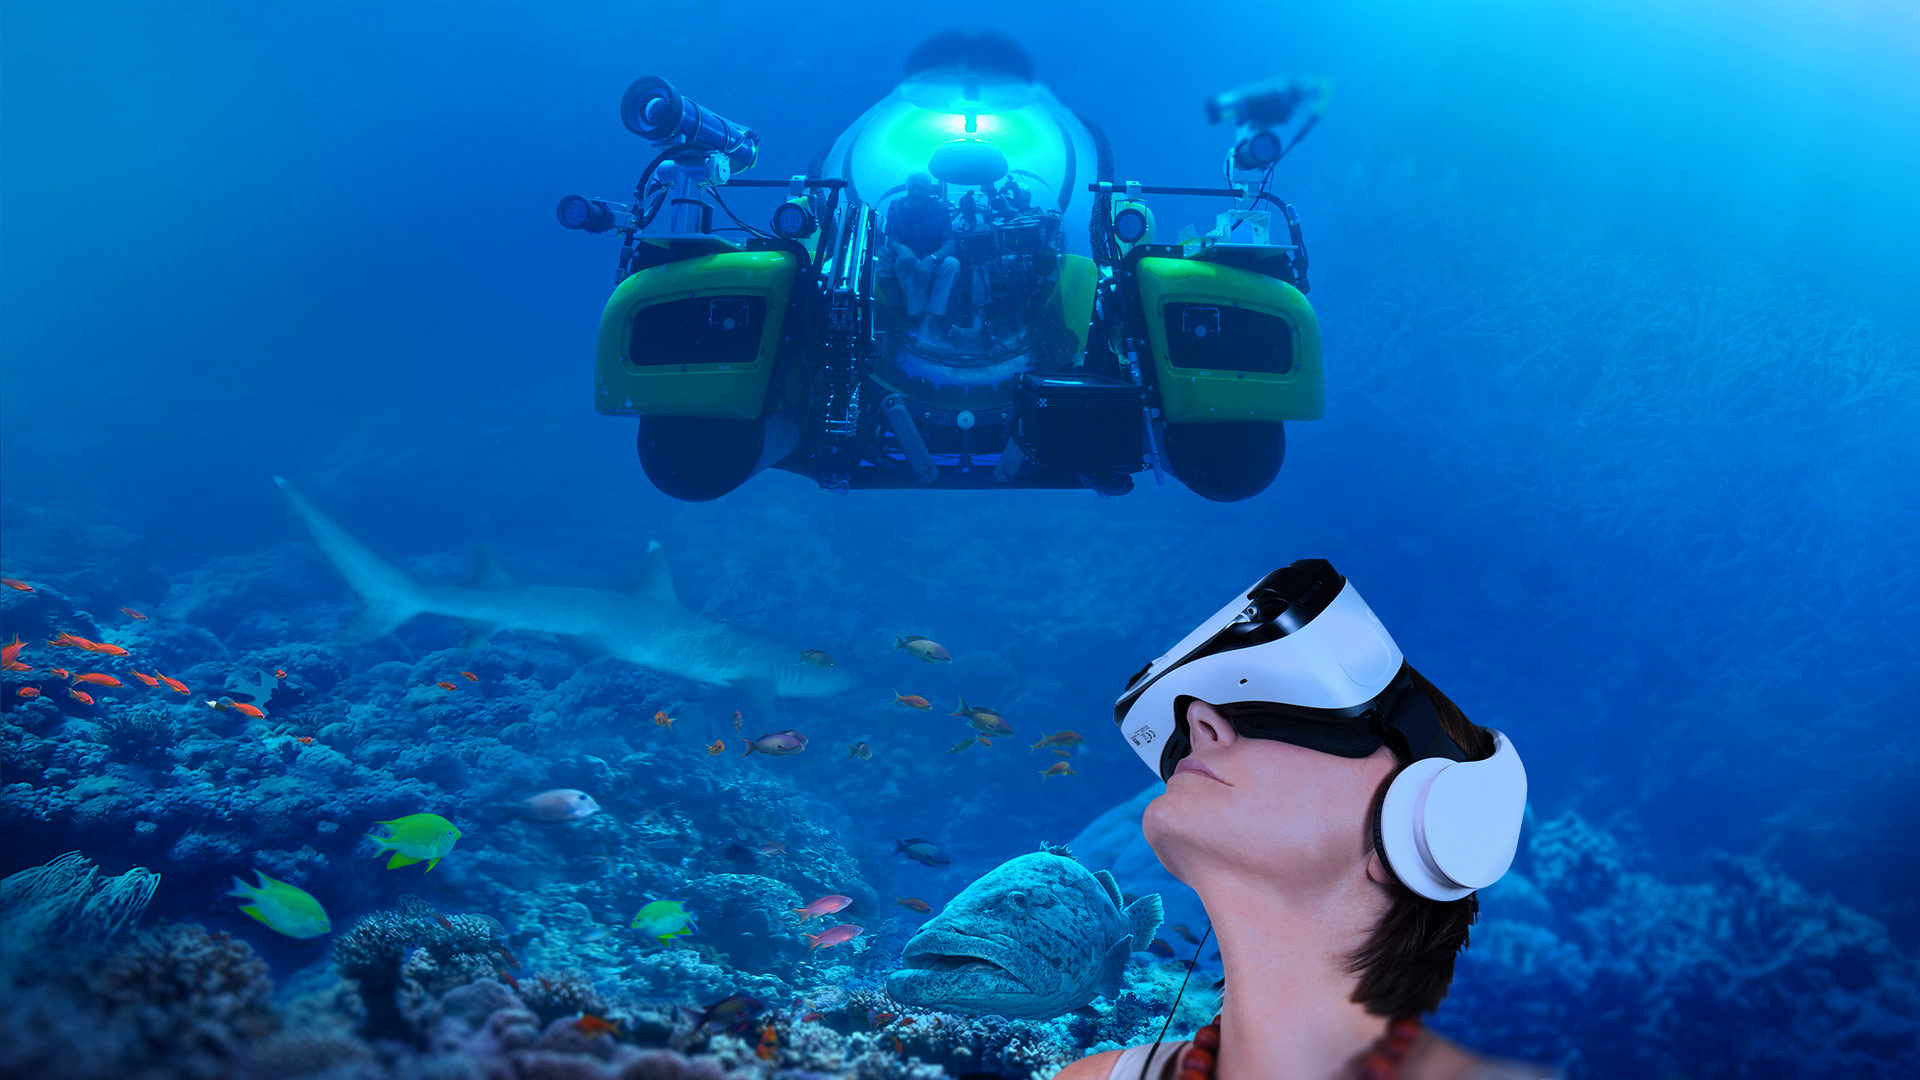 David Attenborough's Great Barrier Reef | VR